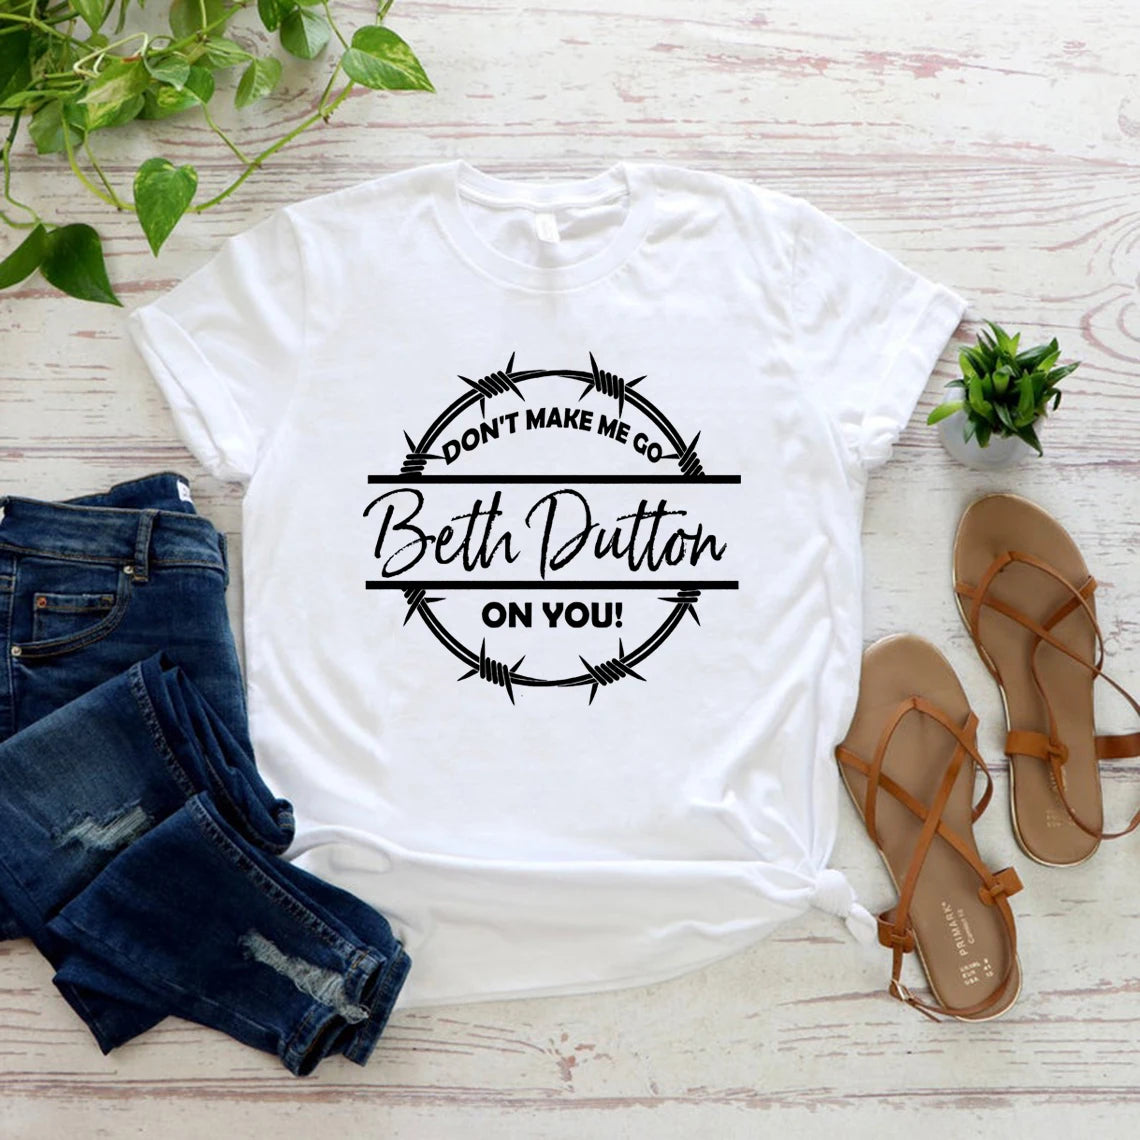 Beth Dutton Yellowstone Graphic T Shirts